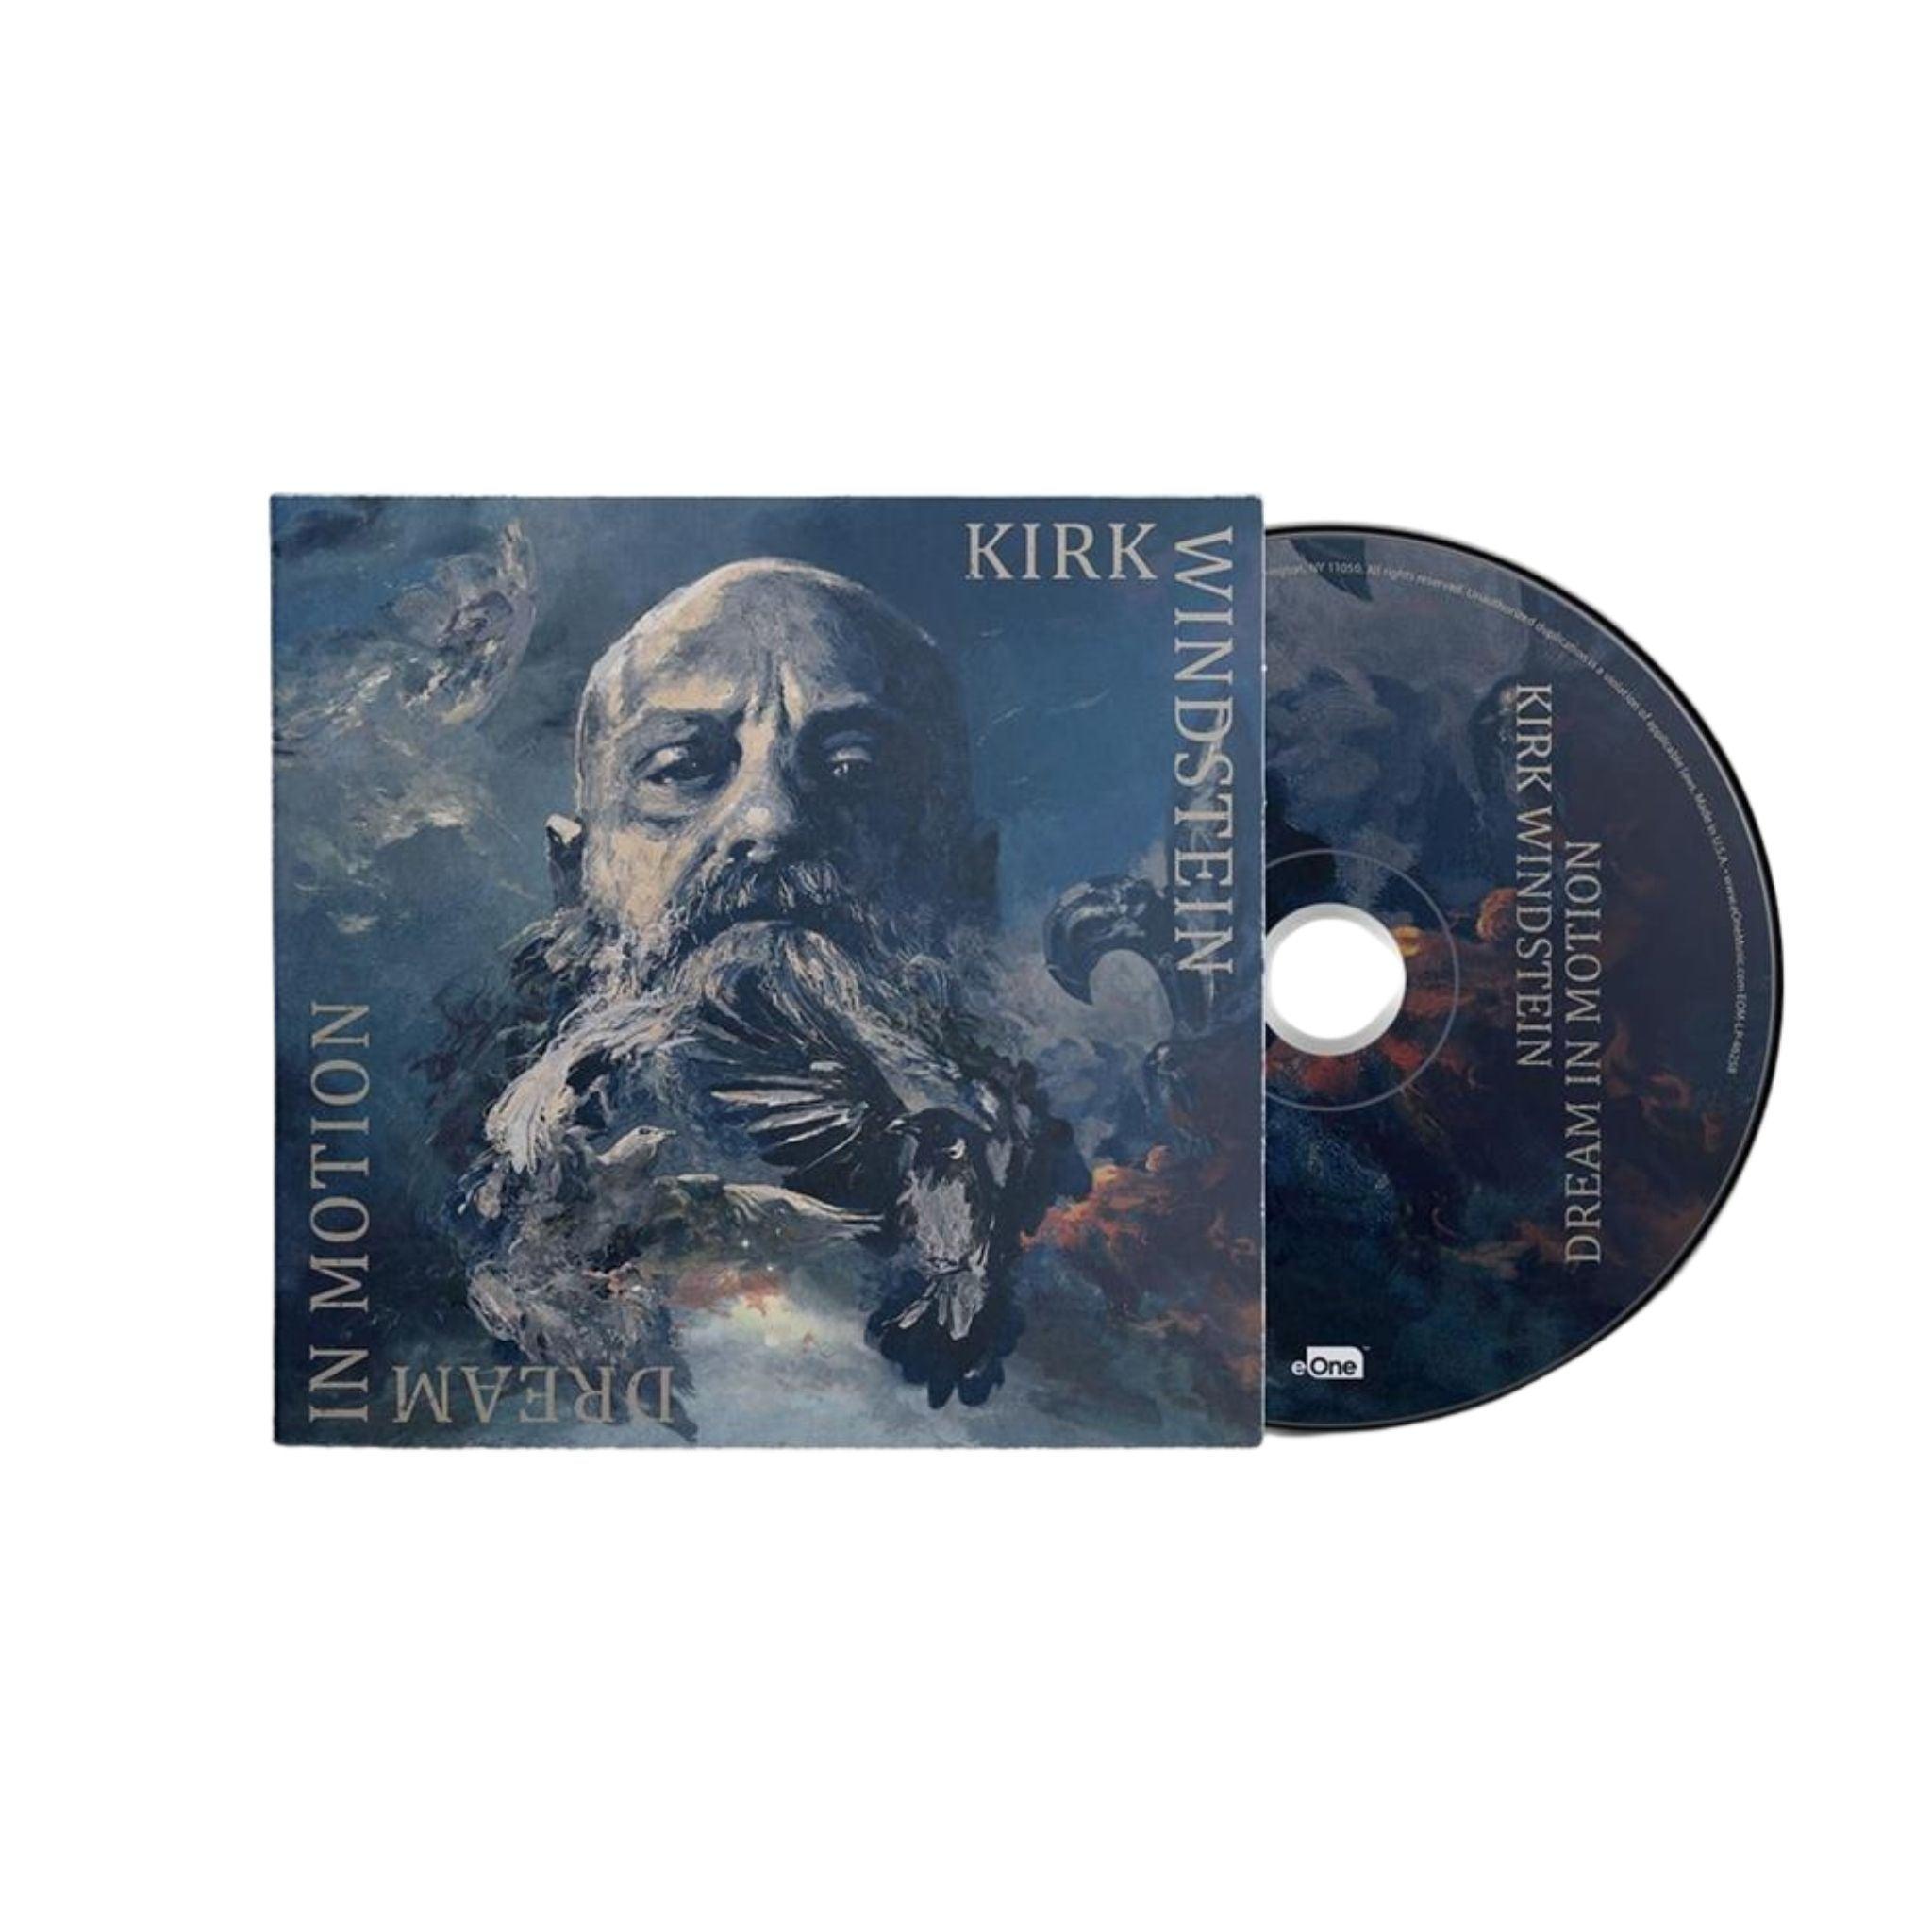 Kirk Windstein - "Dream In Motion" CD - MNRK Heavy